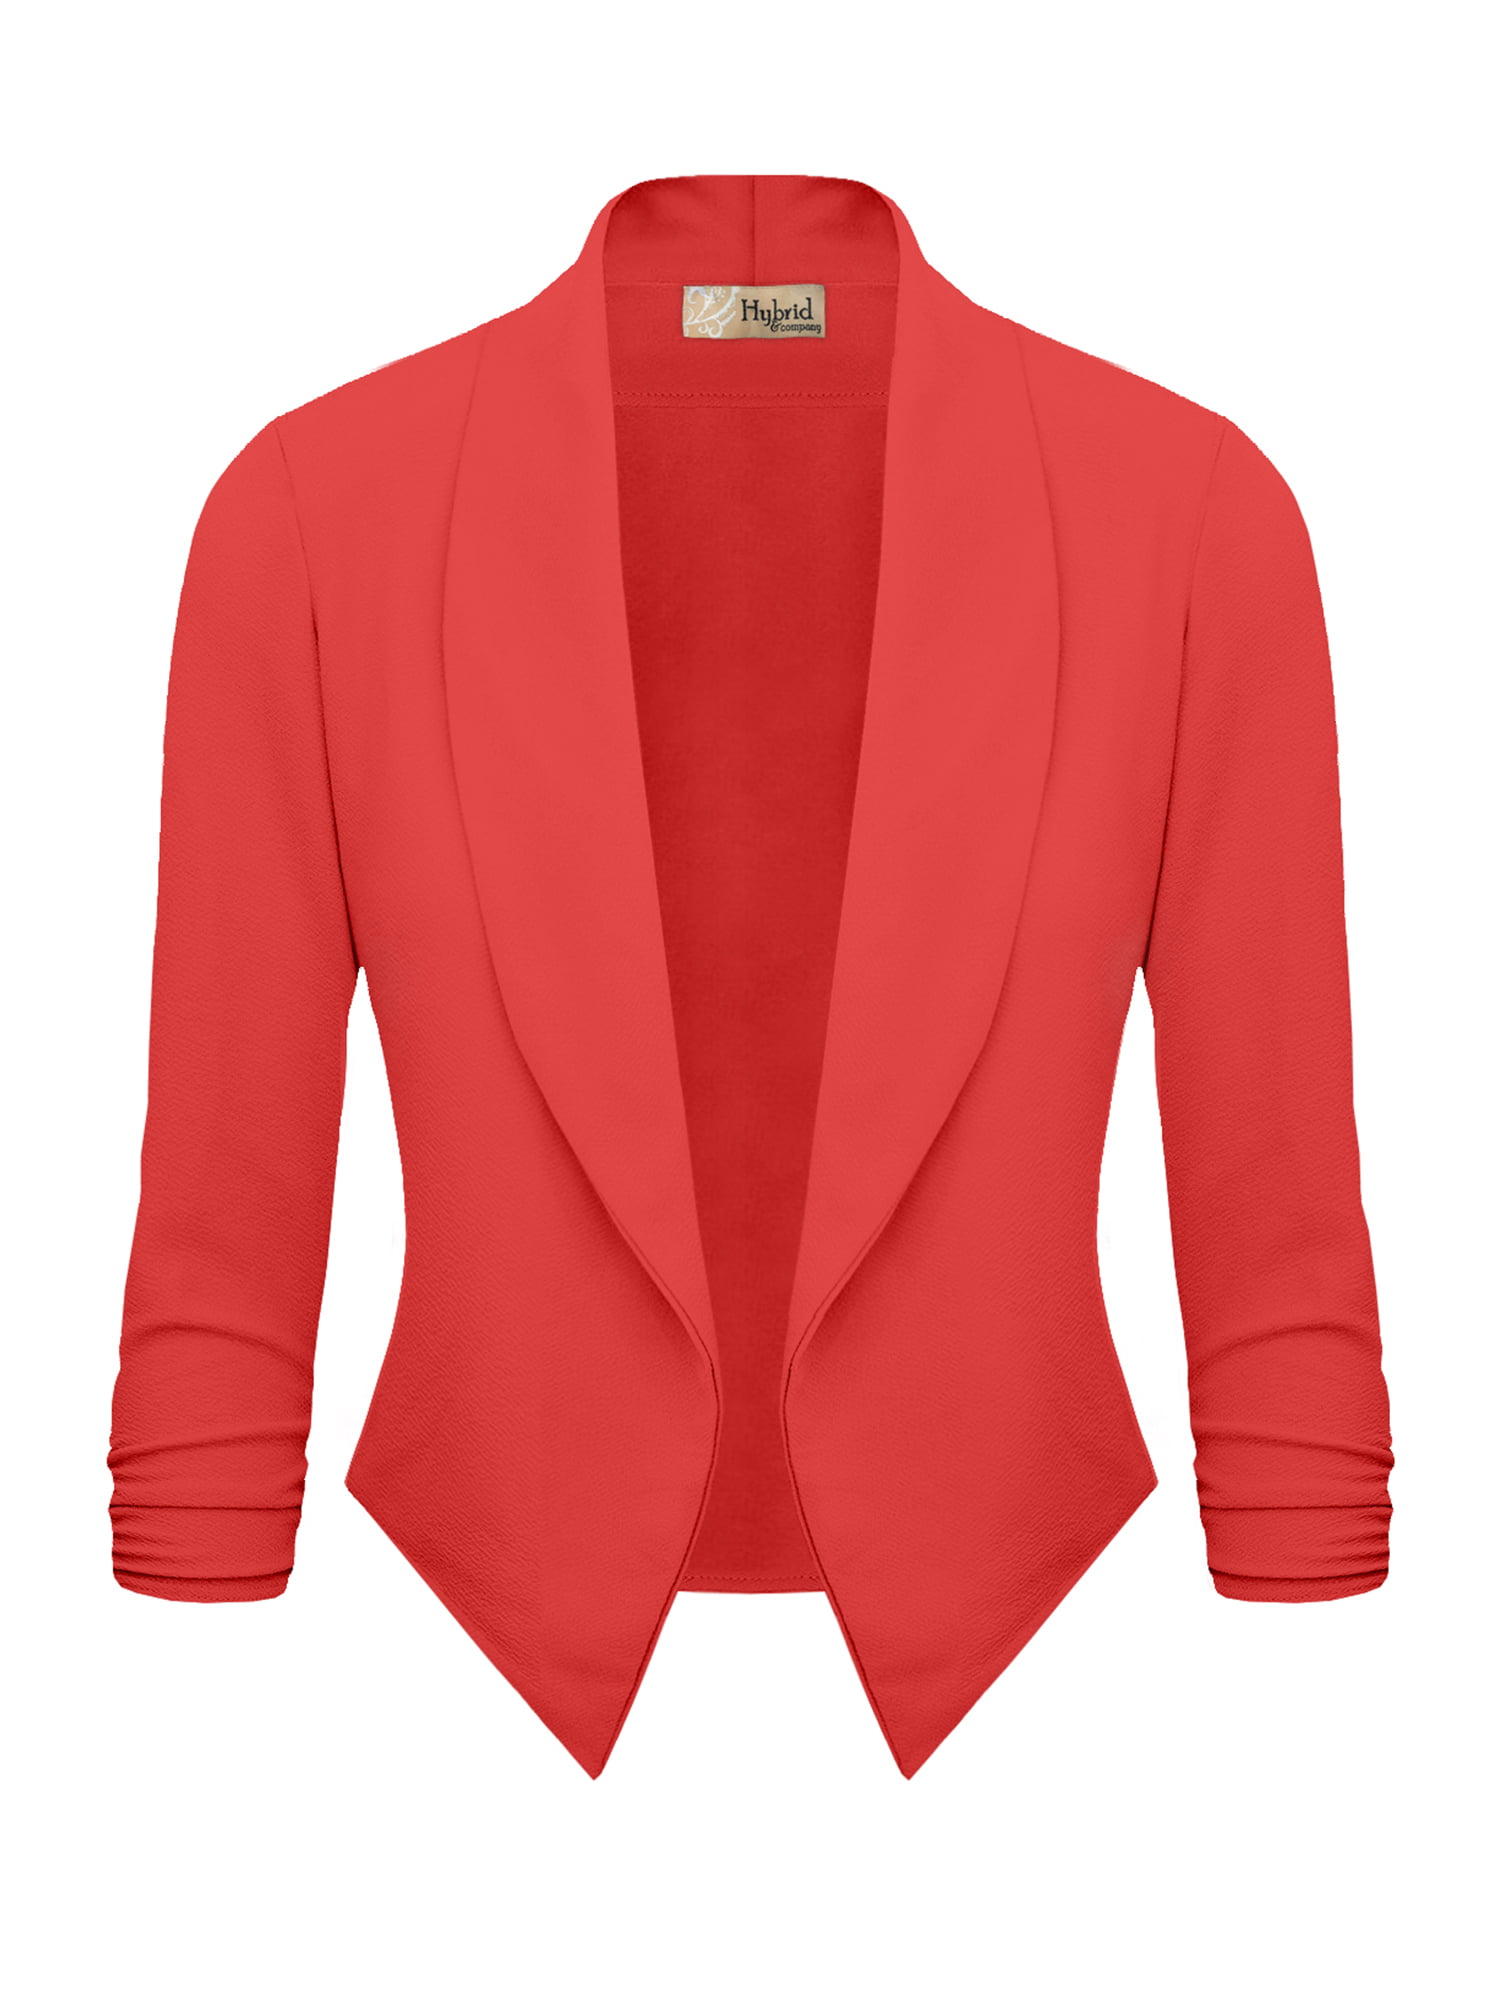 Hybrid & Company Womens Casual Work Office Open Front Blazer JK1133X RED 1X